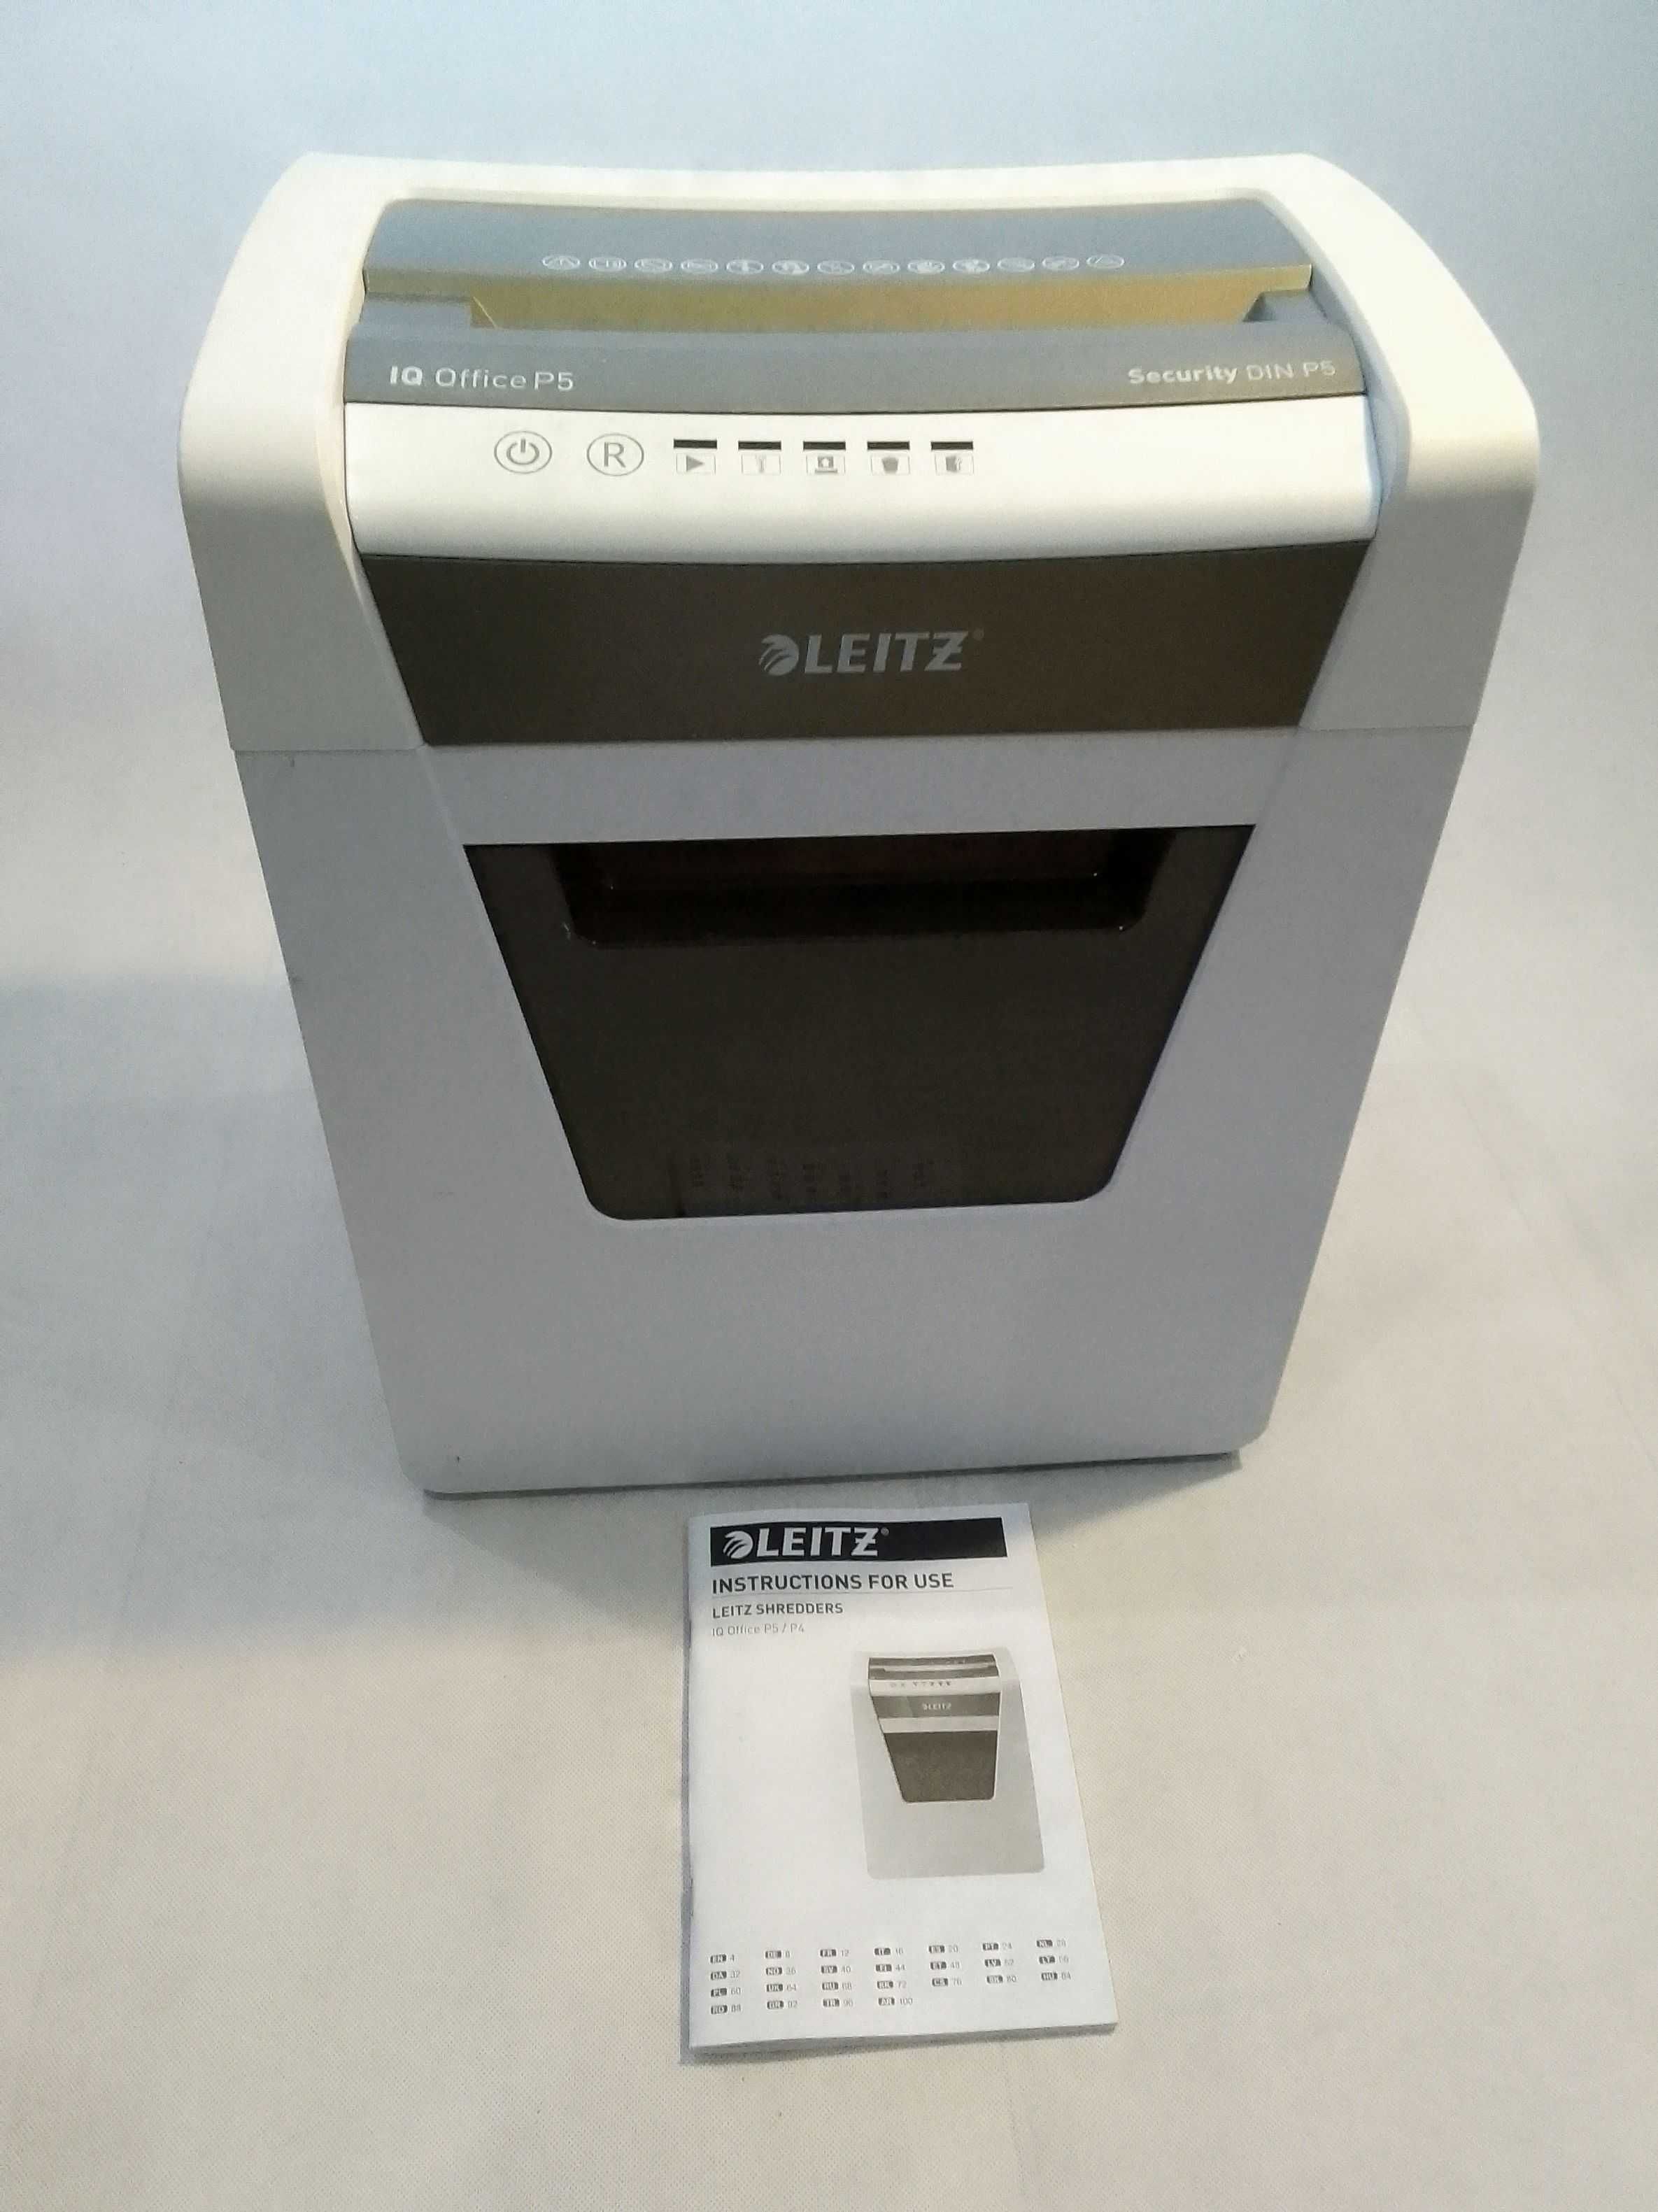 Niszczarka Leitz IQ Office P5, 10 kartek, kosz 23-litry